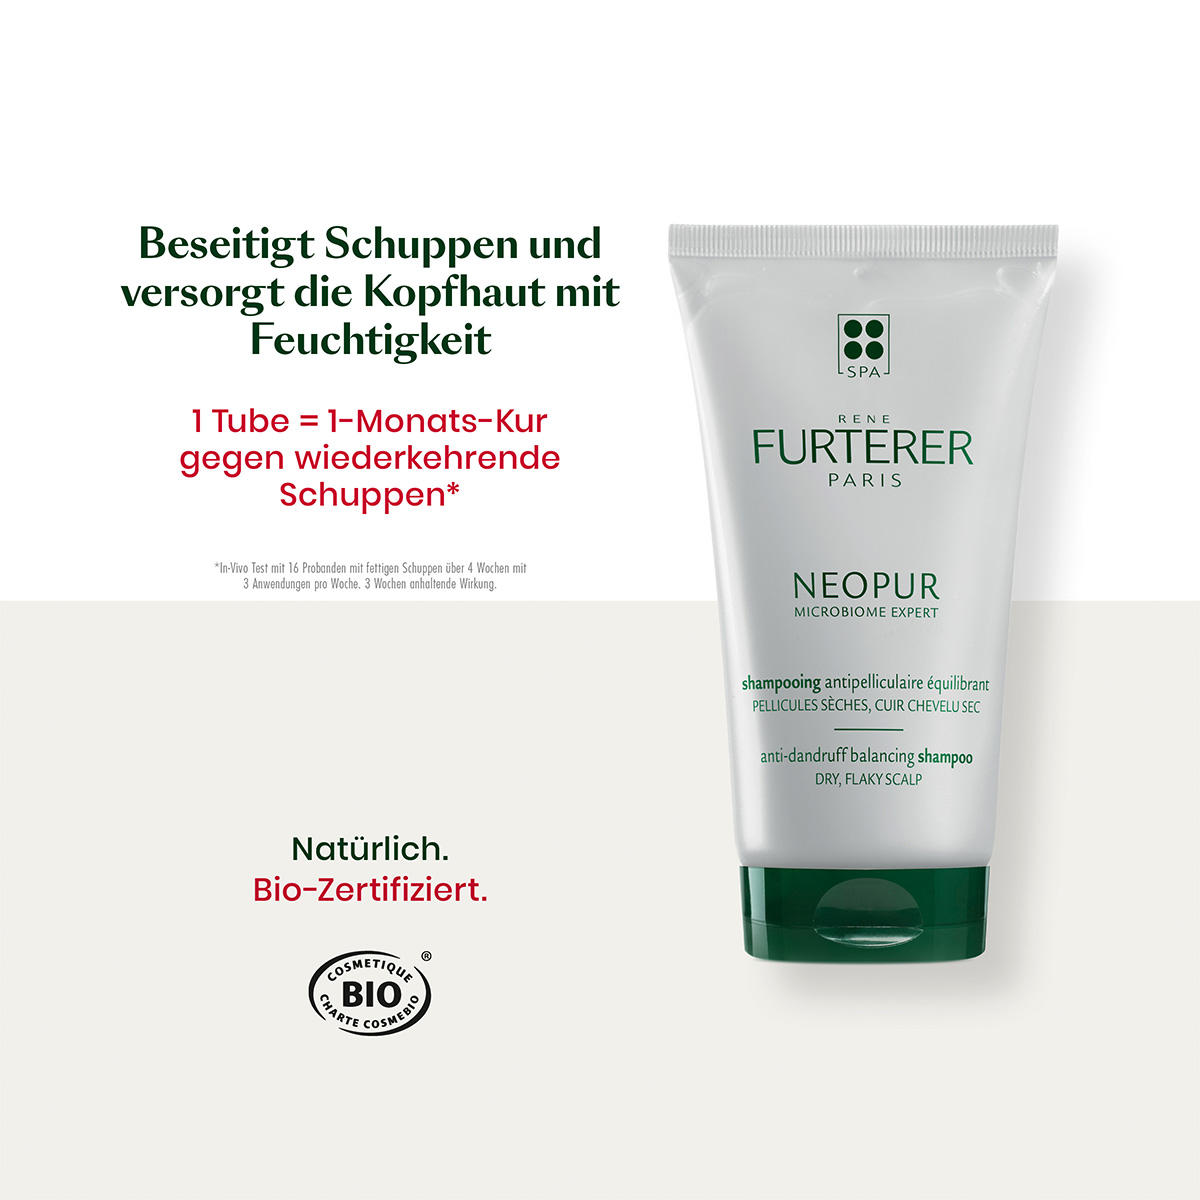 René Furterer Neopur Champú equilibrante anticaspa para cuero cabelludo seco 150 ml - 7